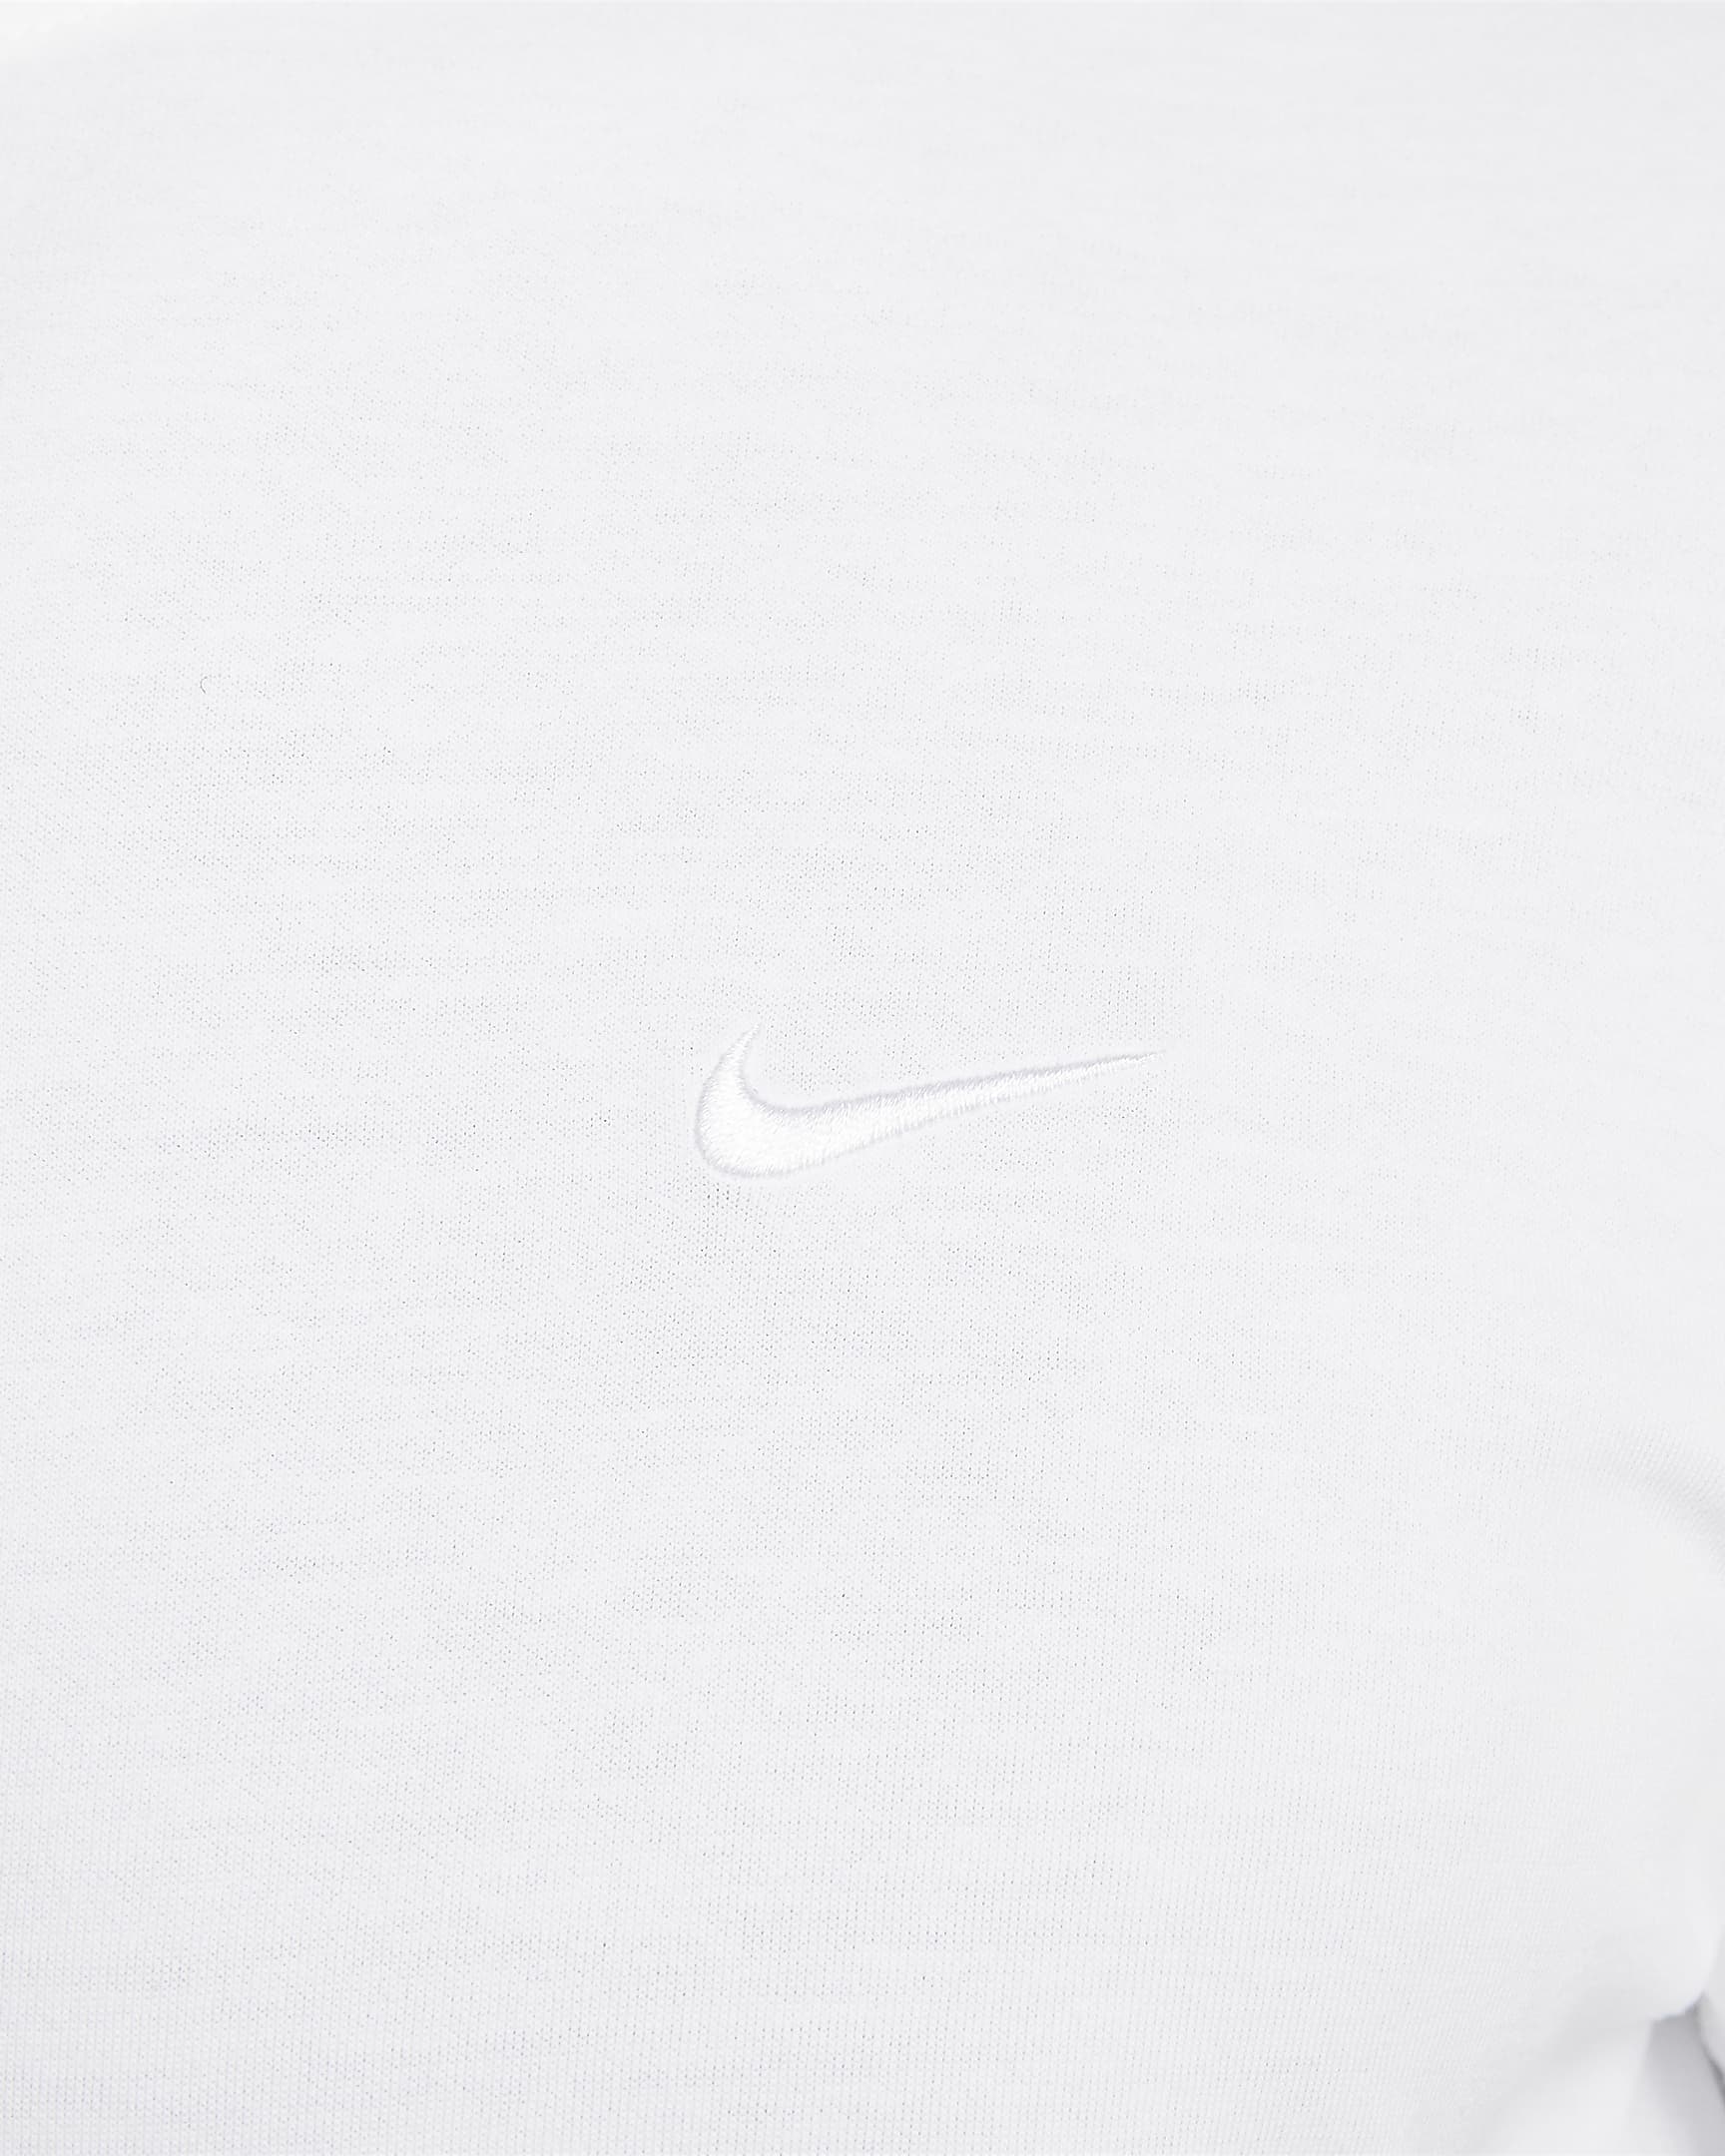 Nike Dri-FIT Primary Men's Training T-shirt - White/White